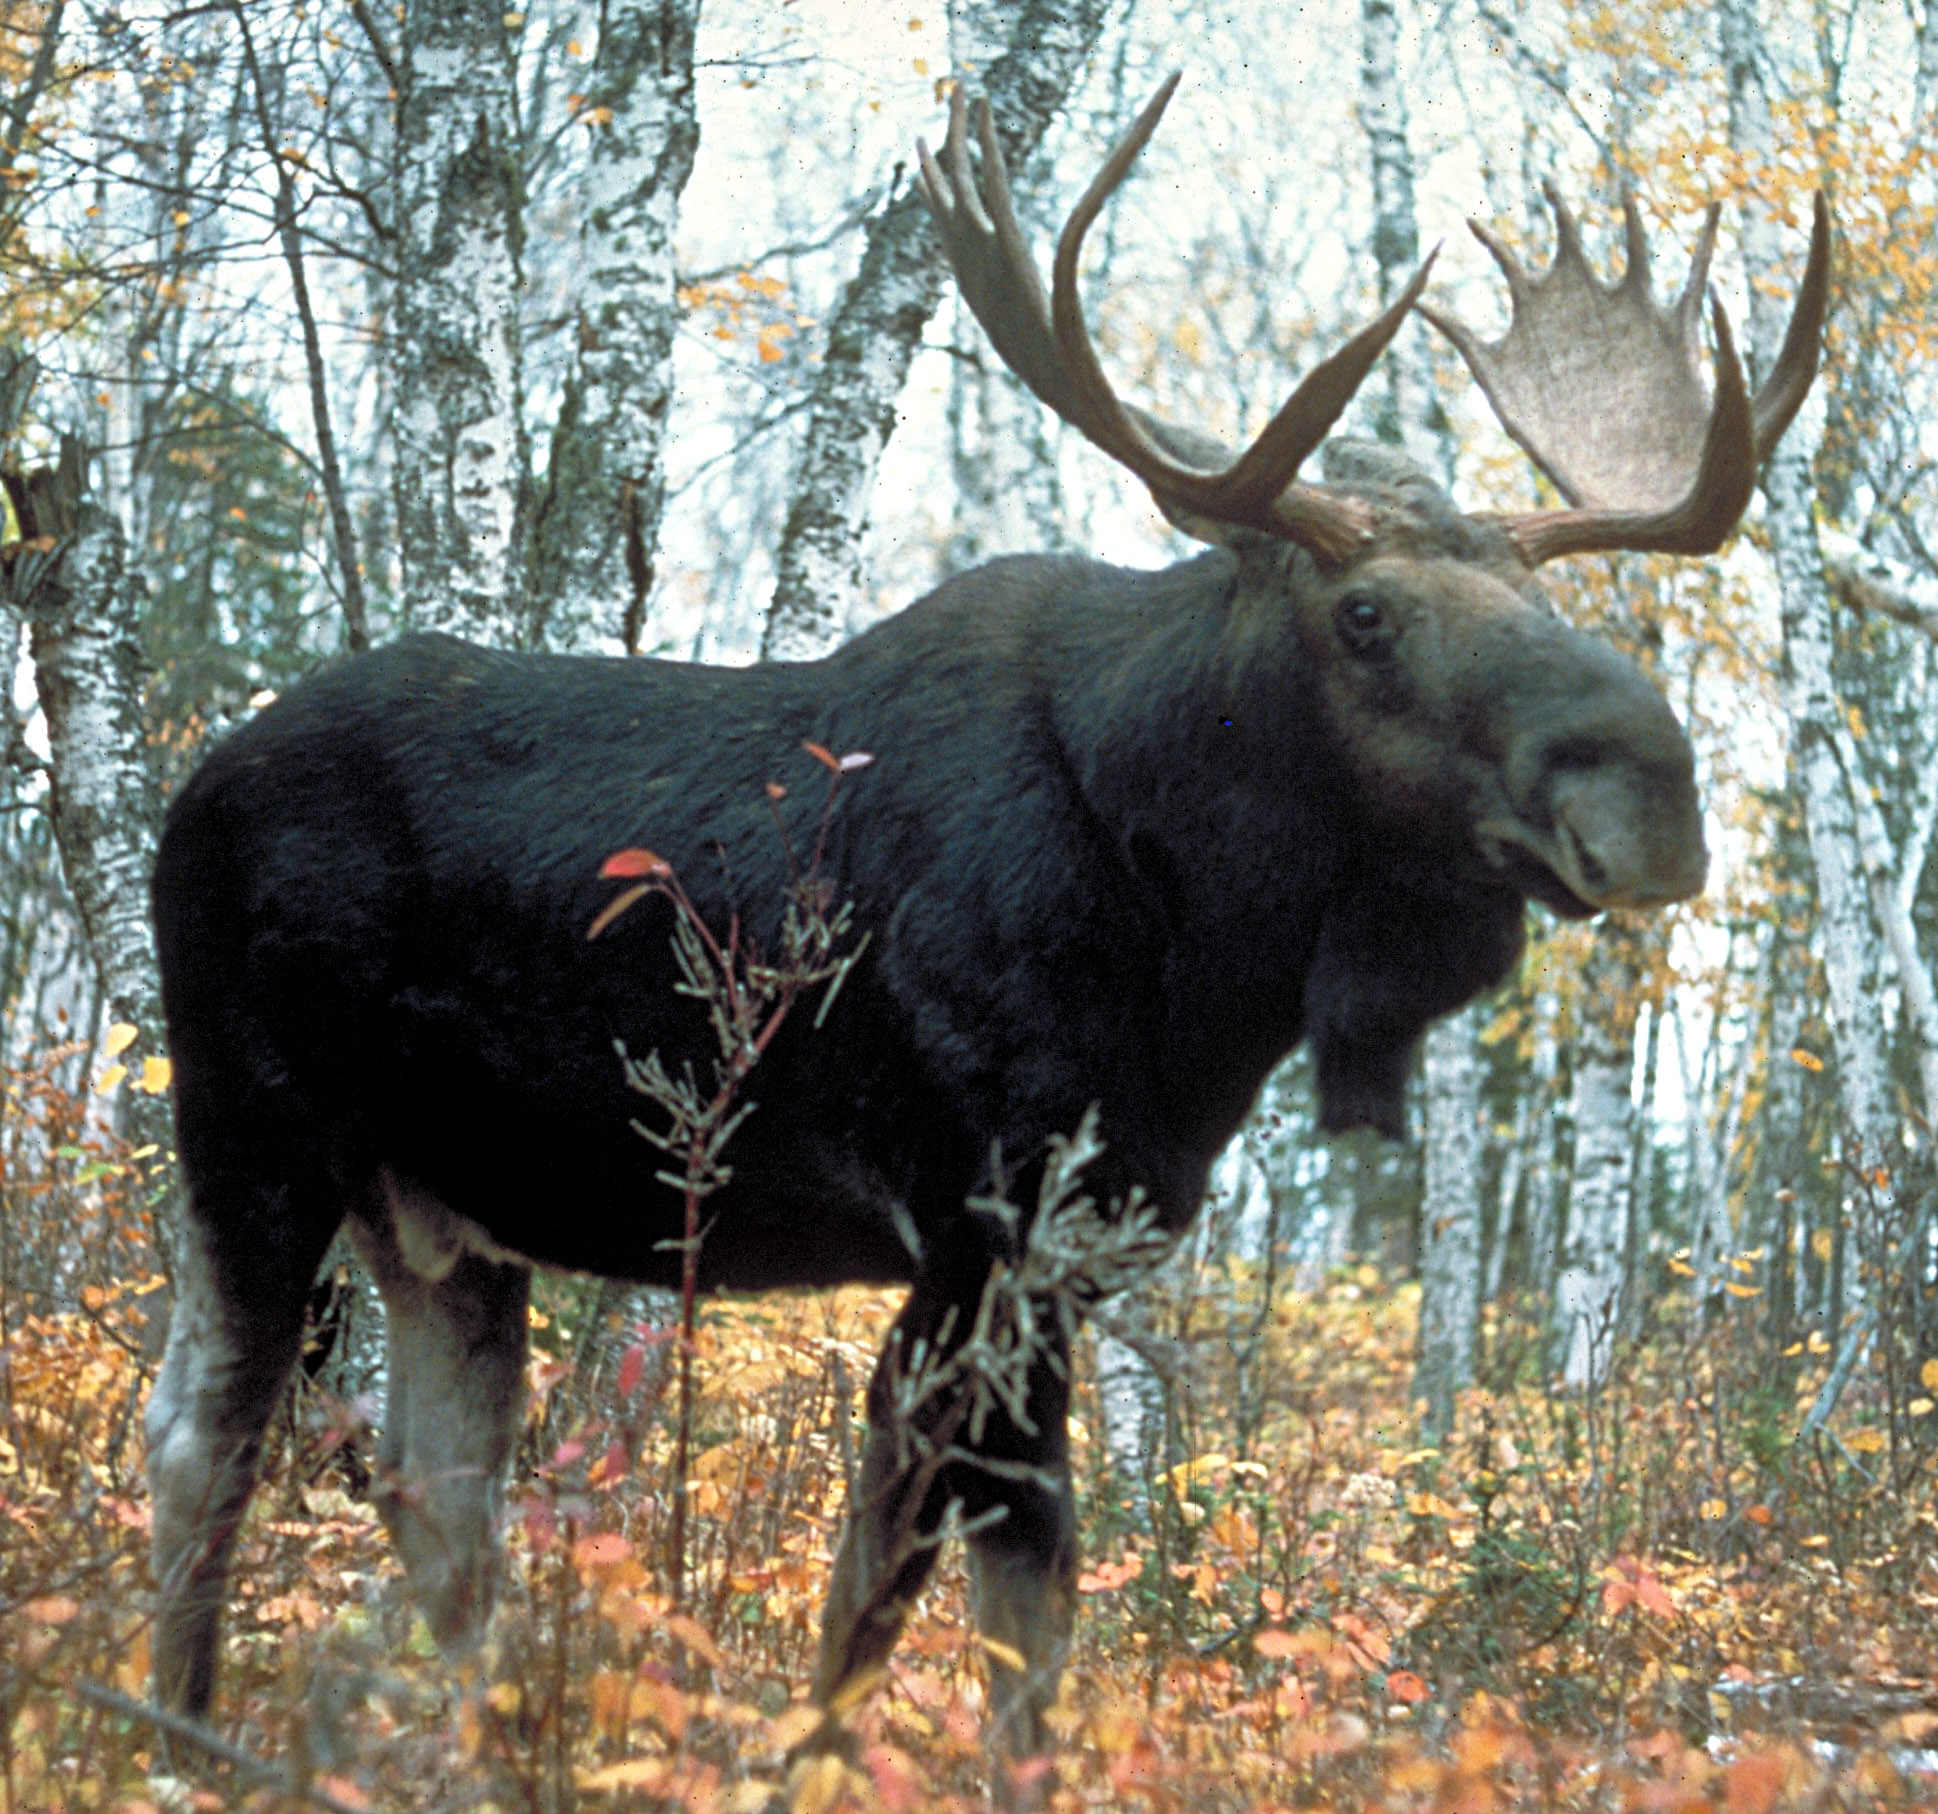 Are moose social animals?